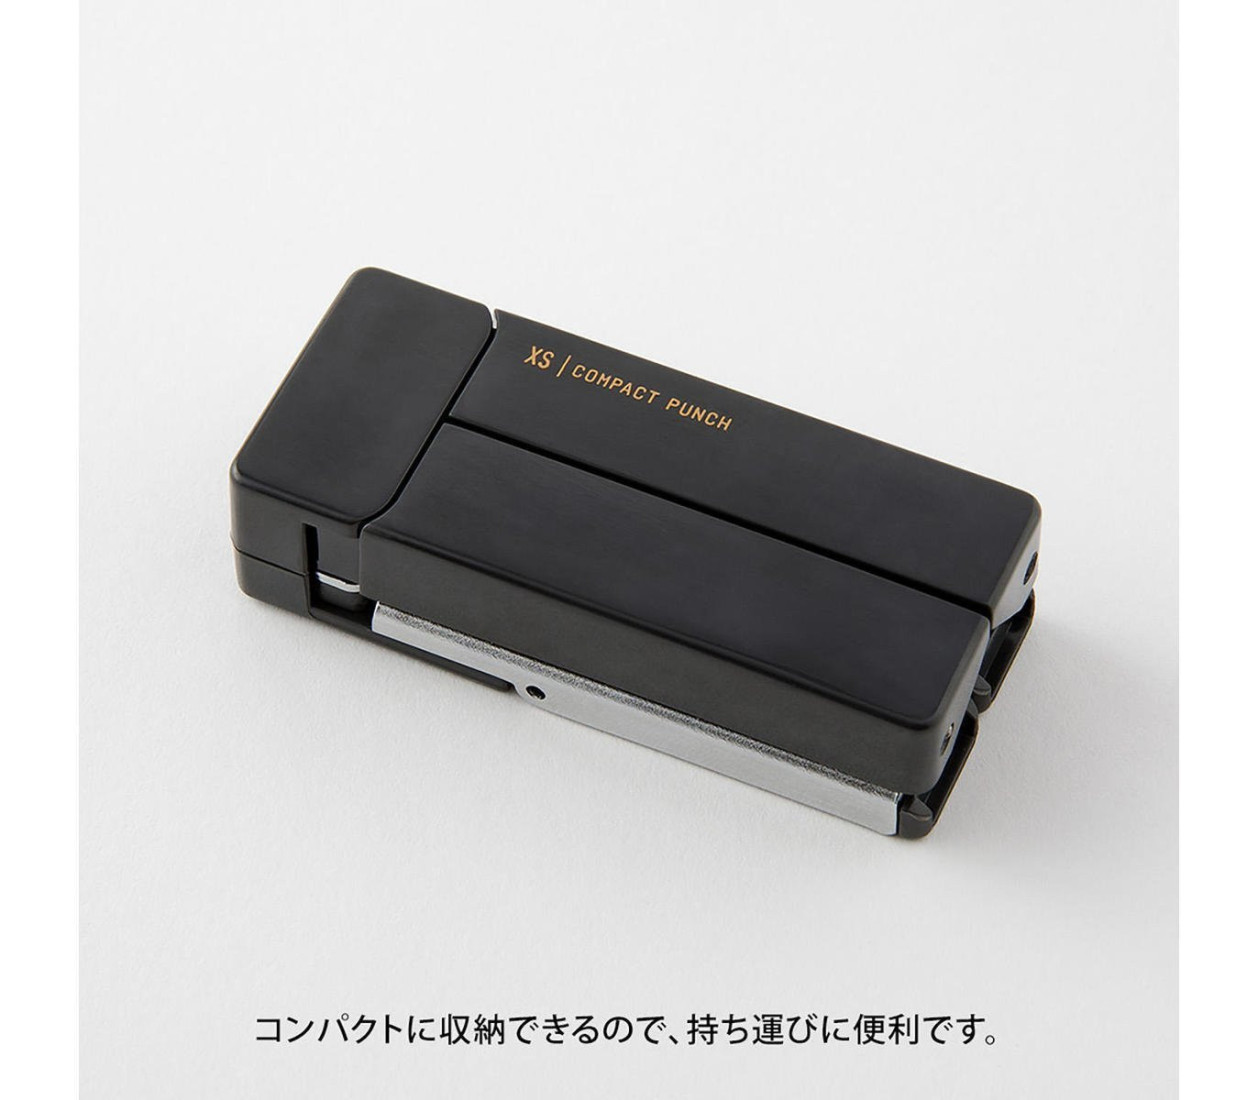 Midori XS (extra small) Compact Punch Black 35544006